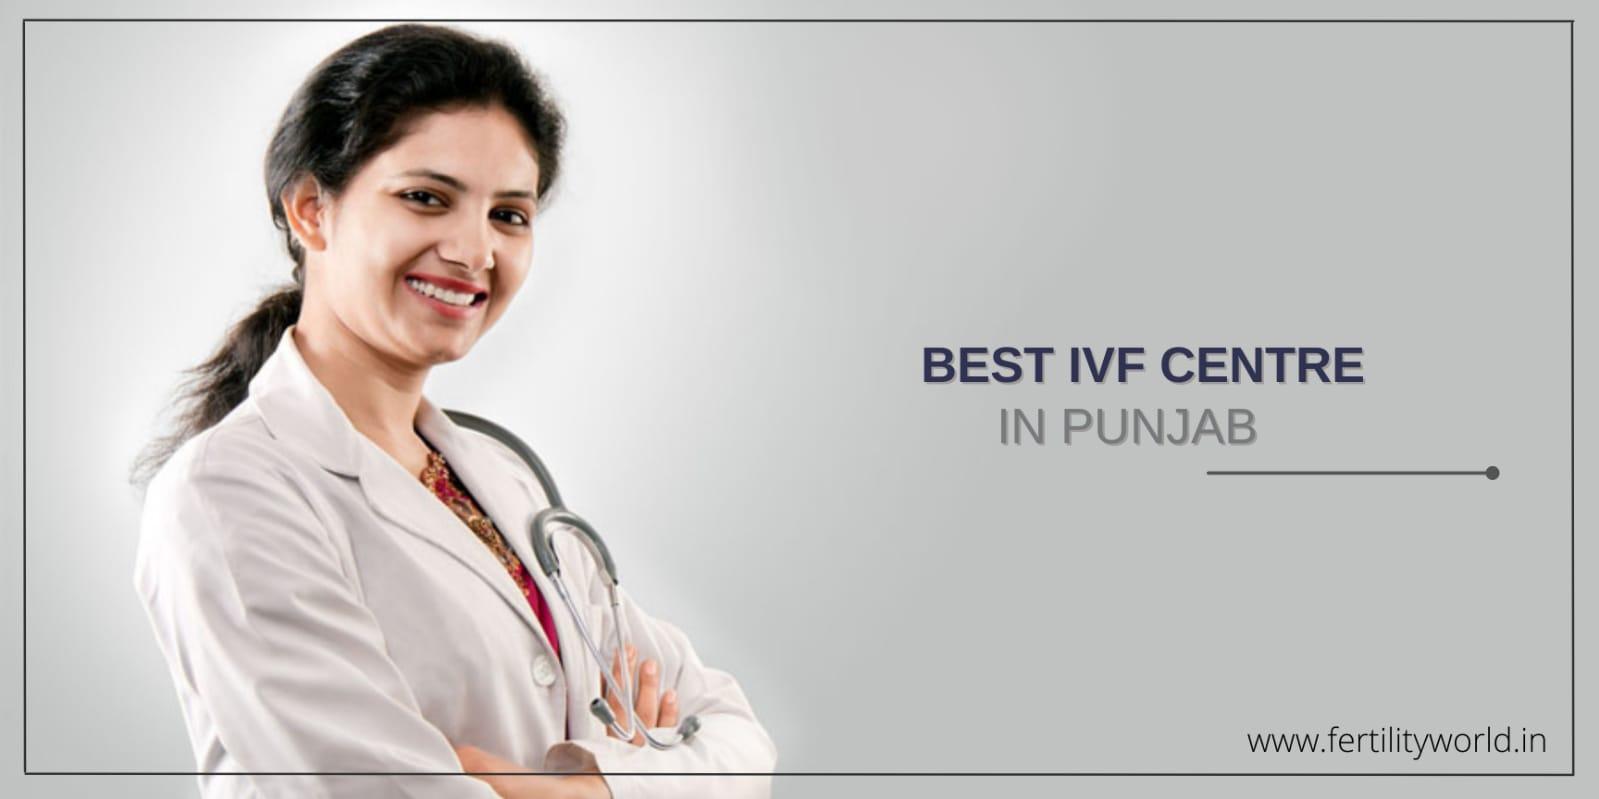 Best IVF center in Punjab